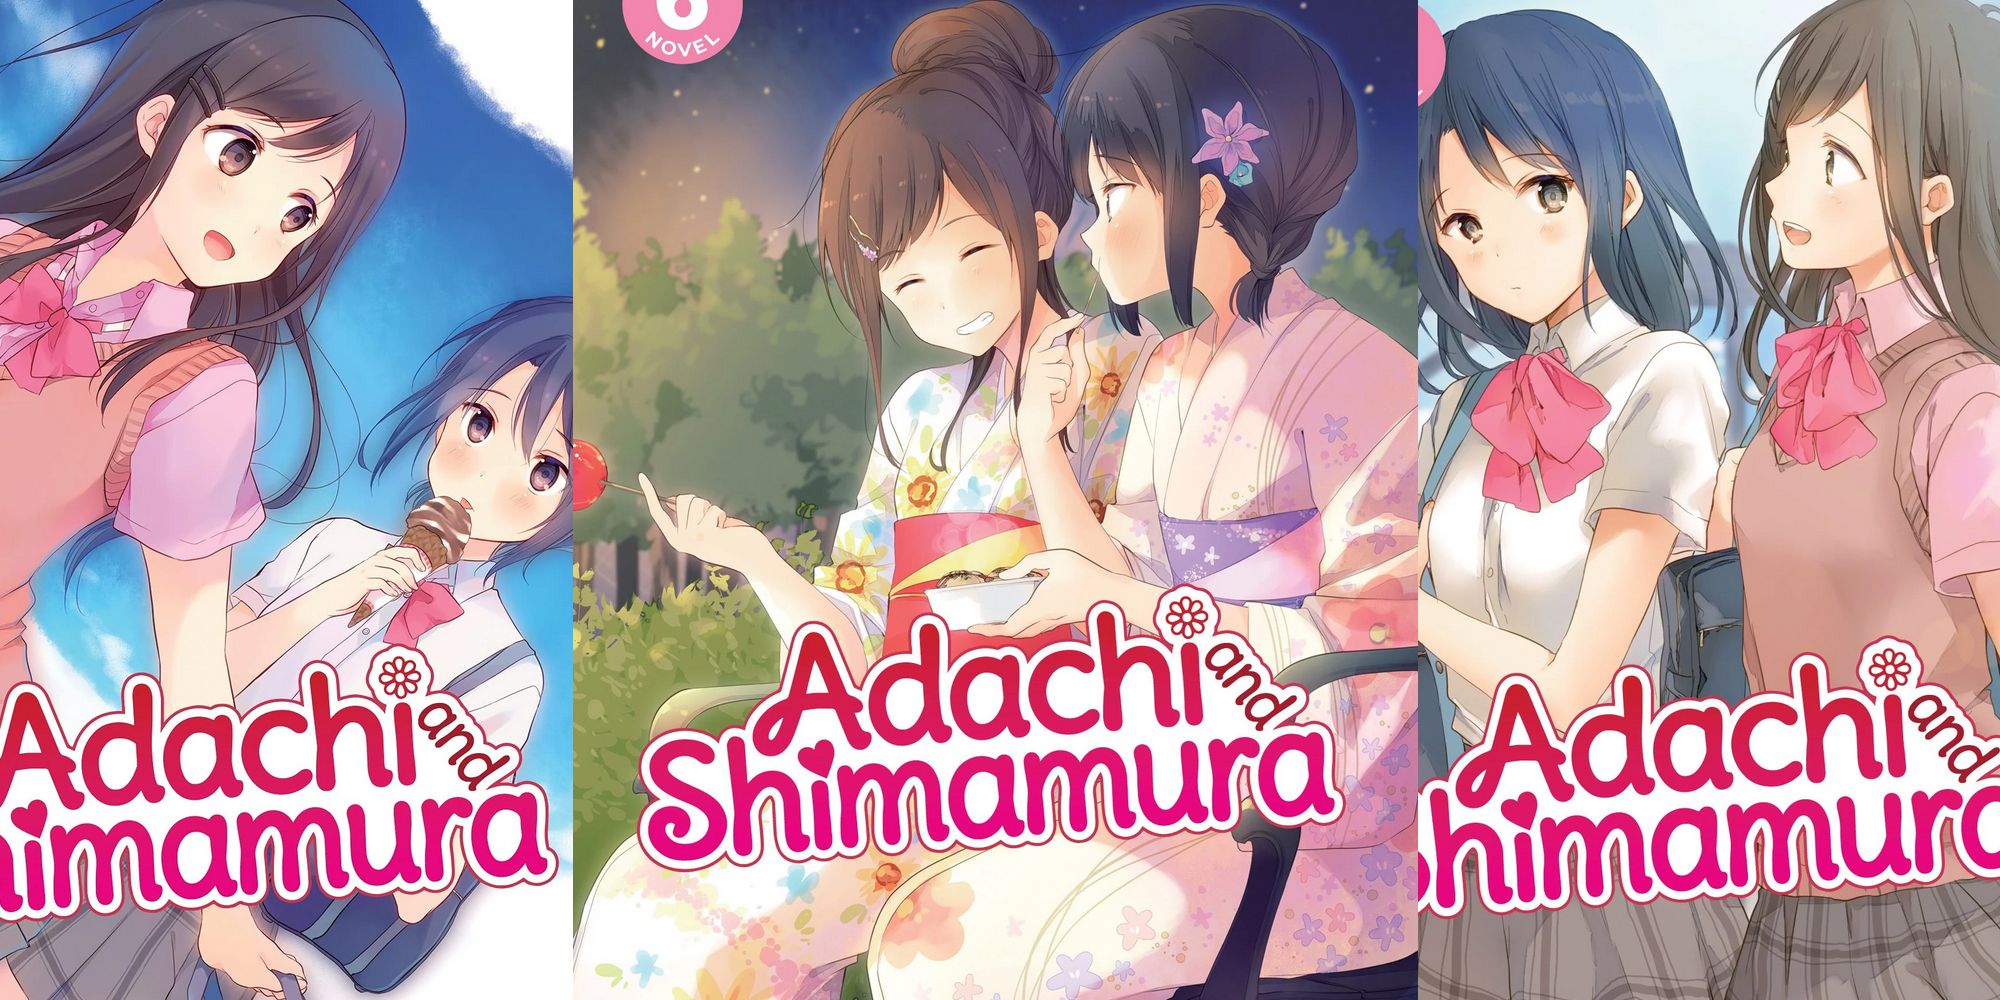 Adachi And Shimamura covers of light novels ice cream yukata walking to school